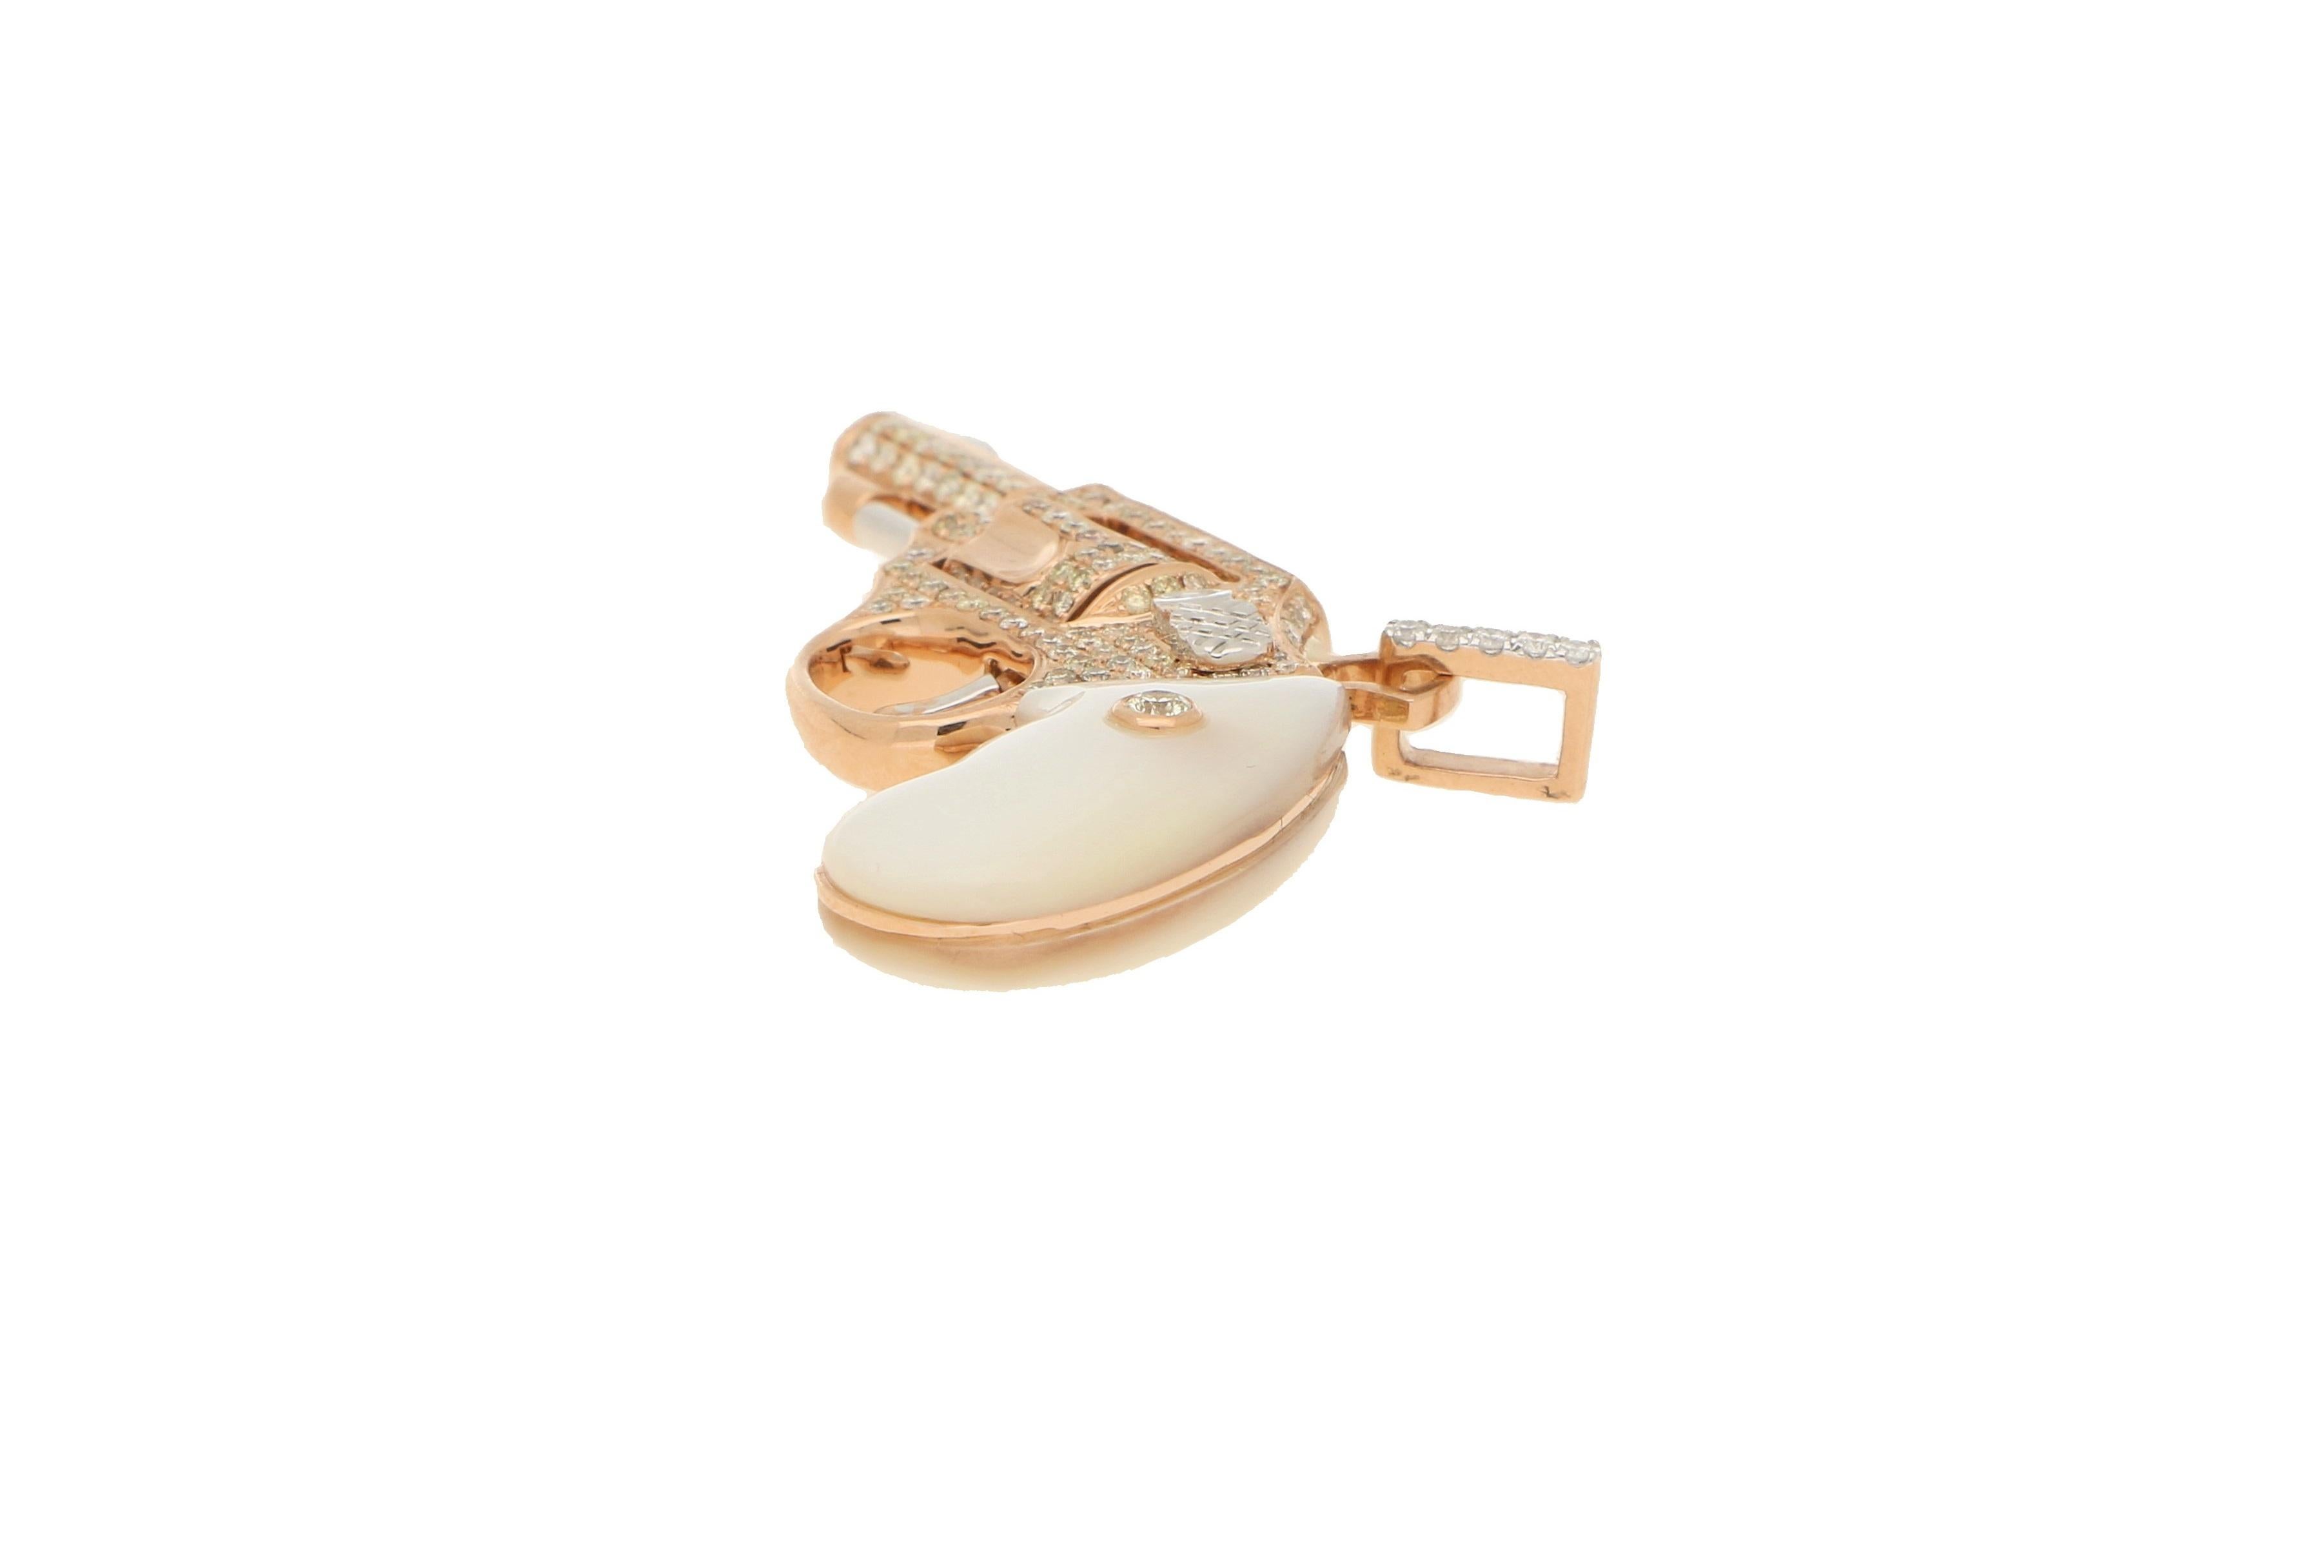 Diamond Gun Revolver White Pearl Gem 18 Karat Rose Gold Necklace Pendant Charm For Sale 1